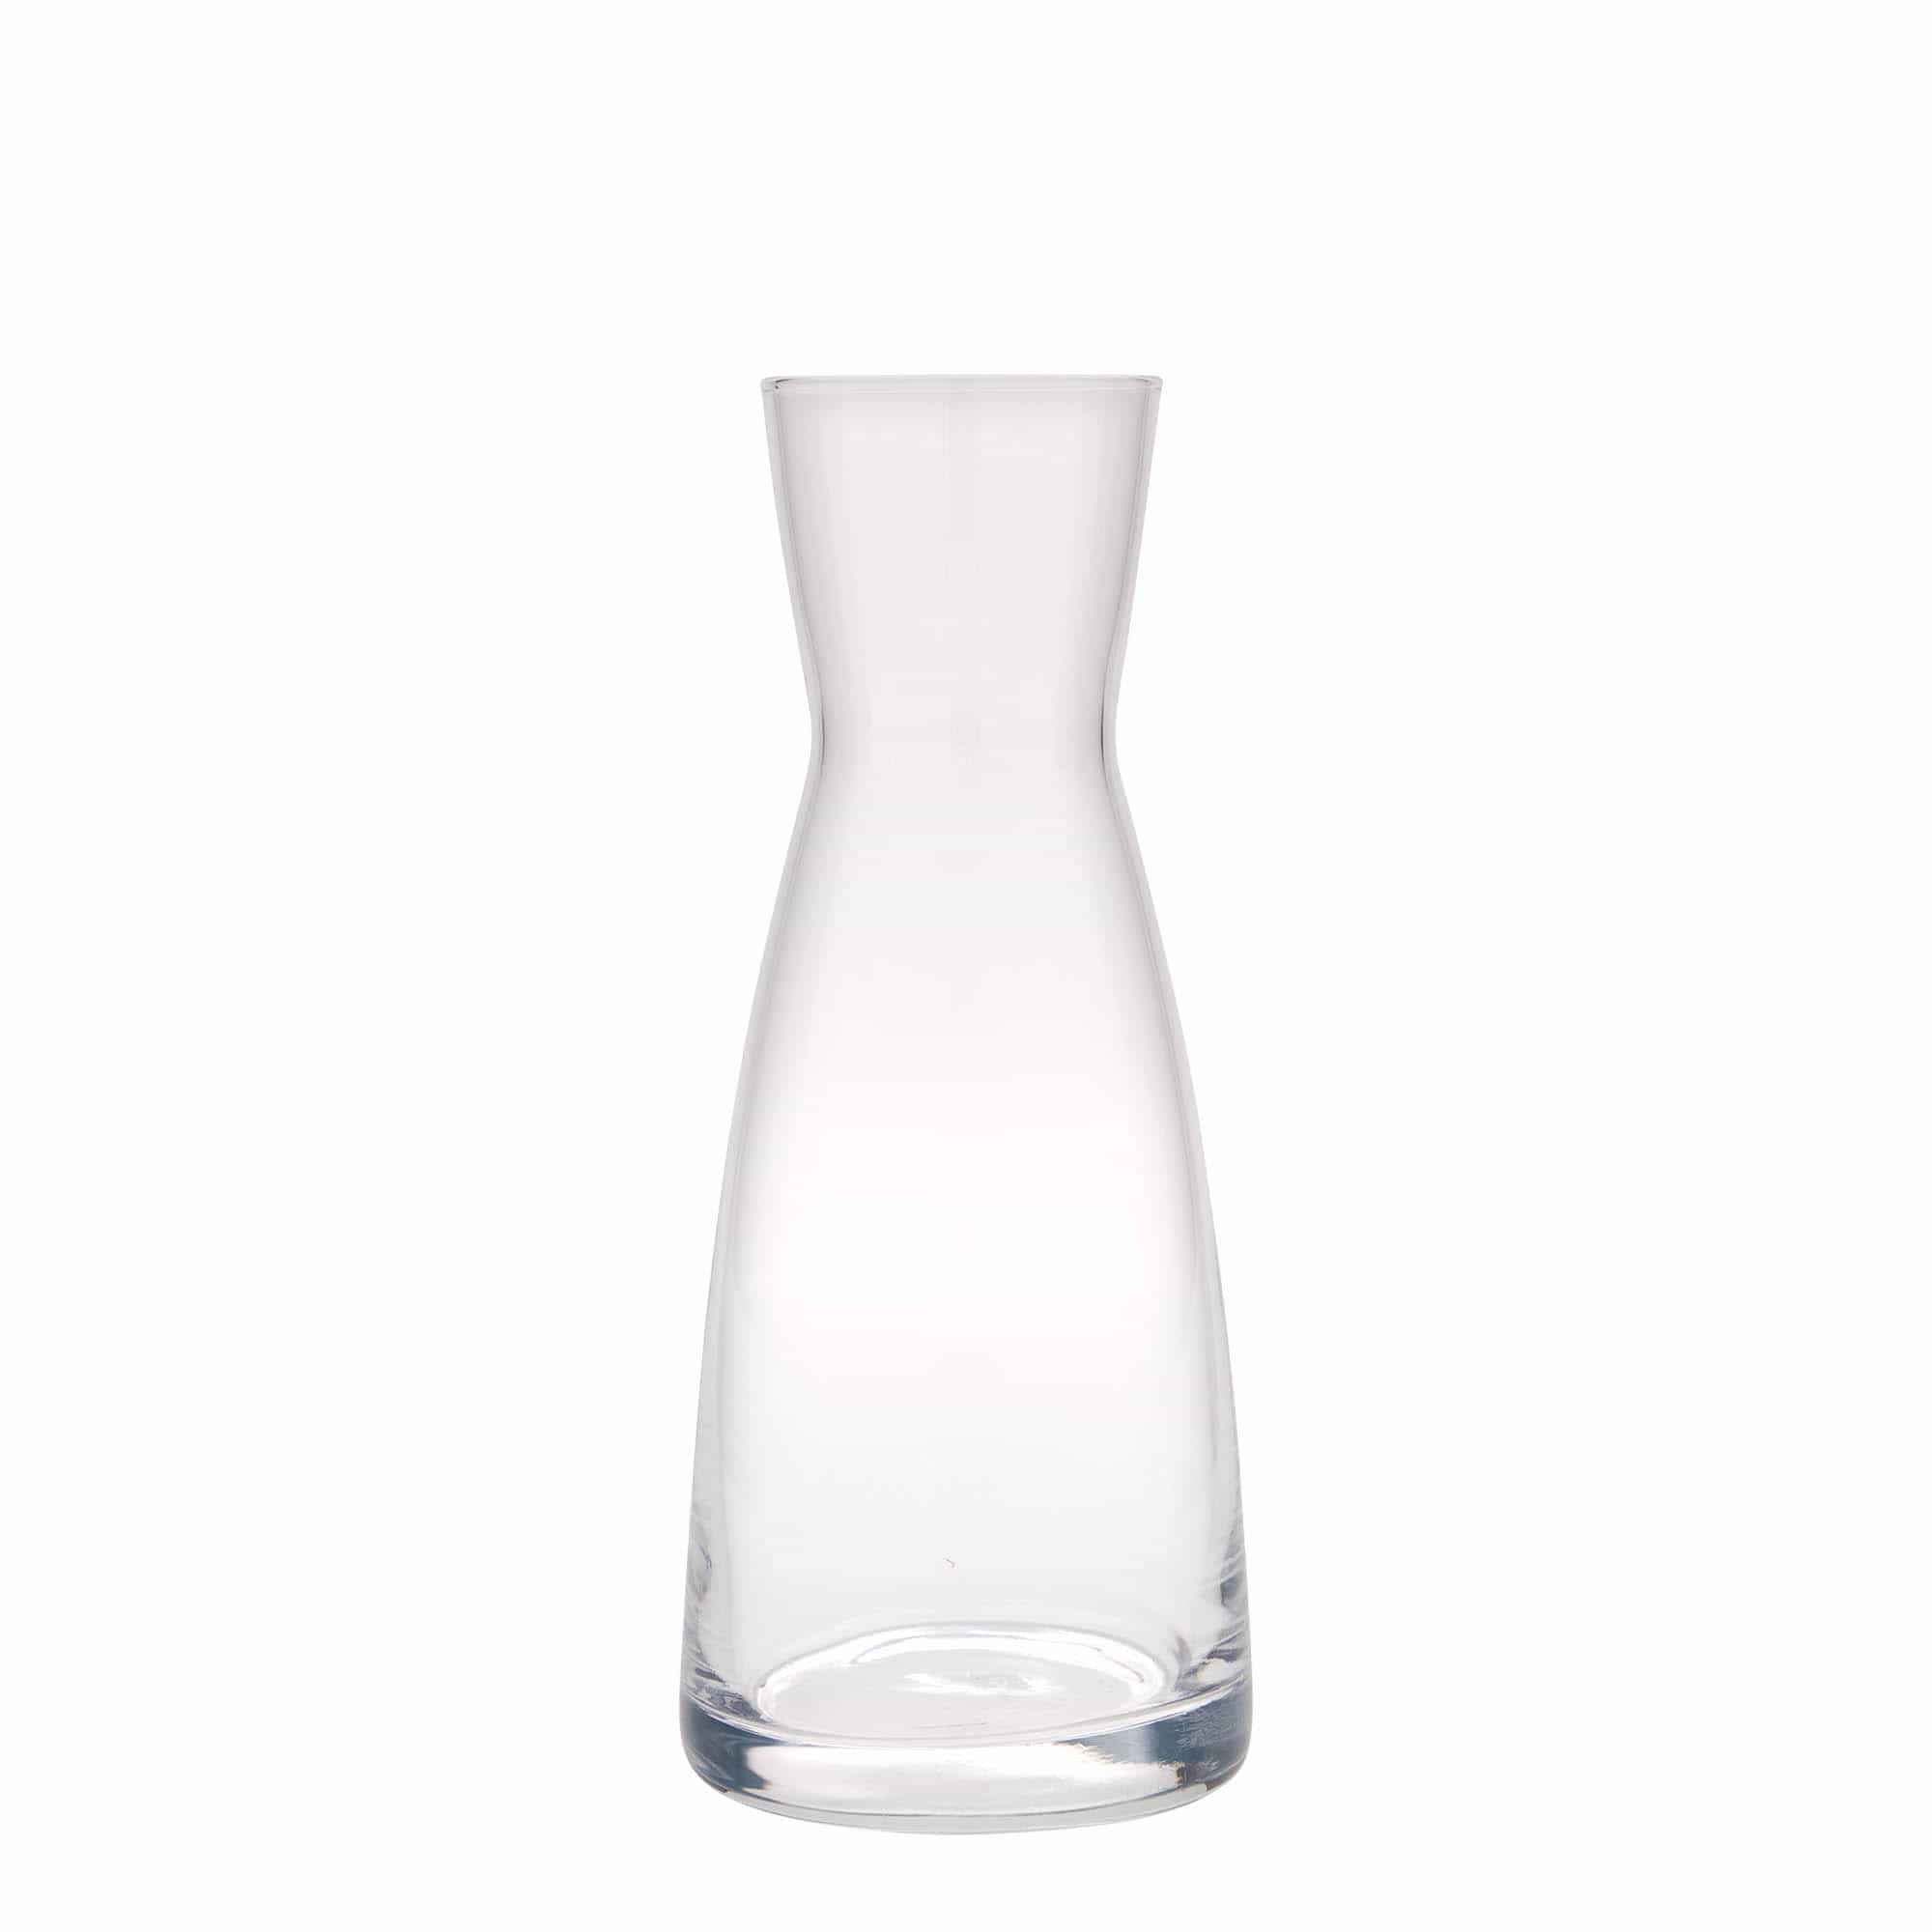 500 ml carafe 'Ypsilon', glass